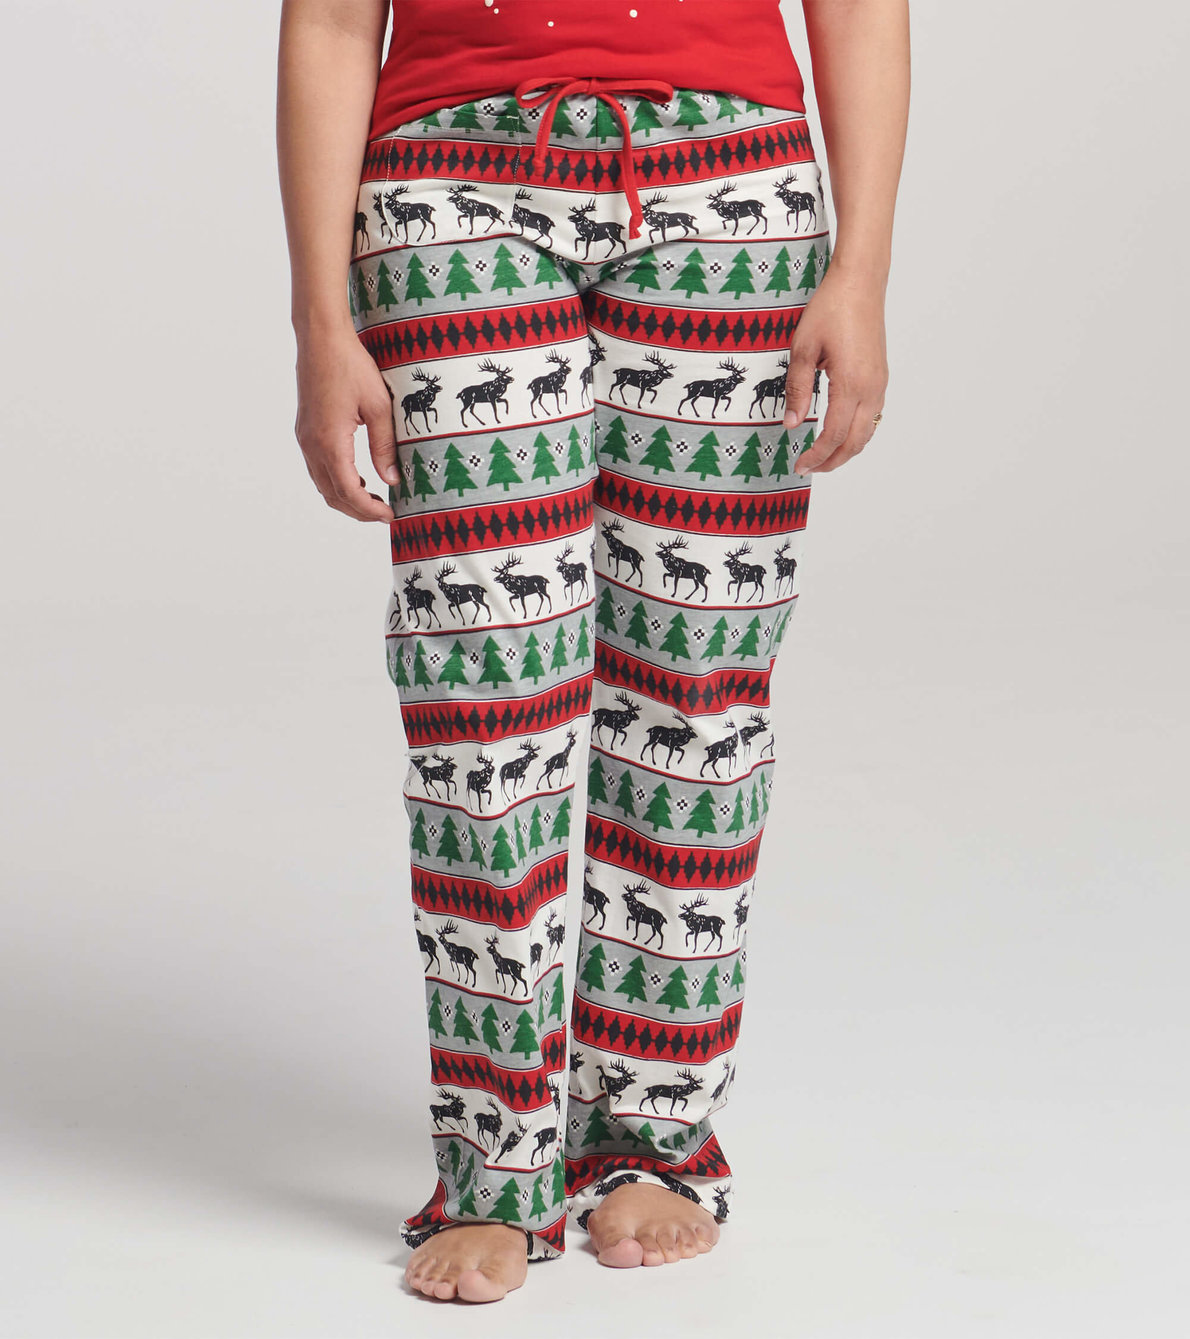 Agrandir l'image de Pantalon de pyjama en jersey pour femme – Wapiti sur motif Fair Isle